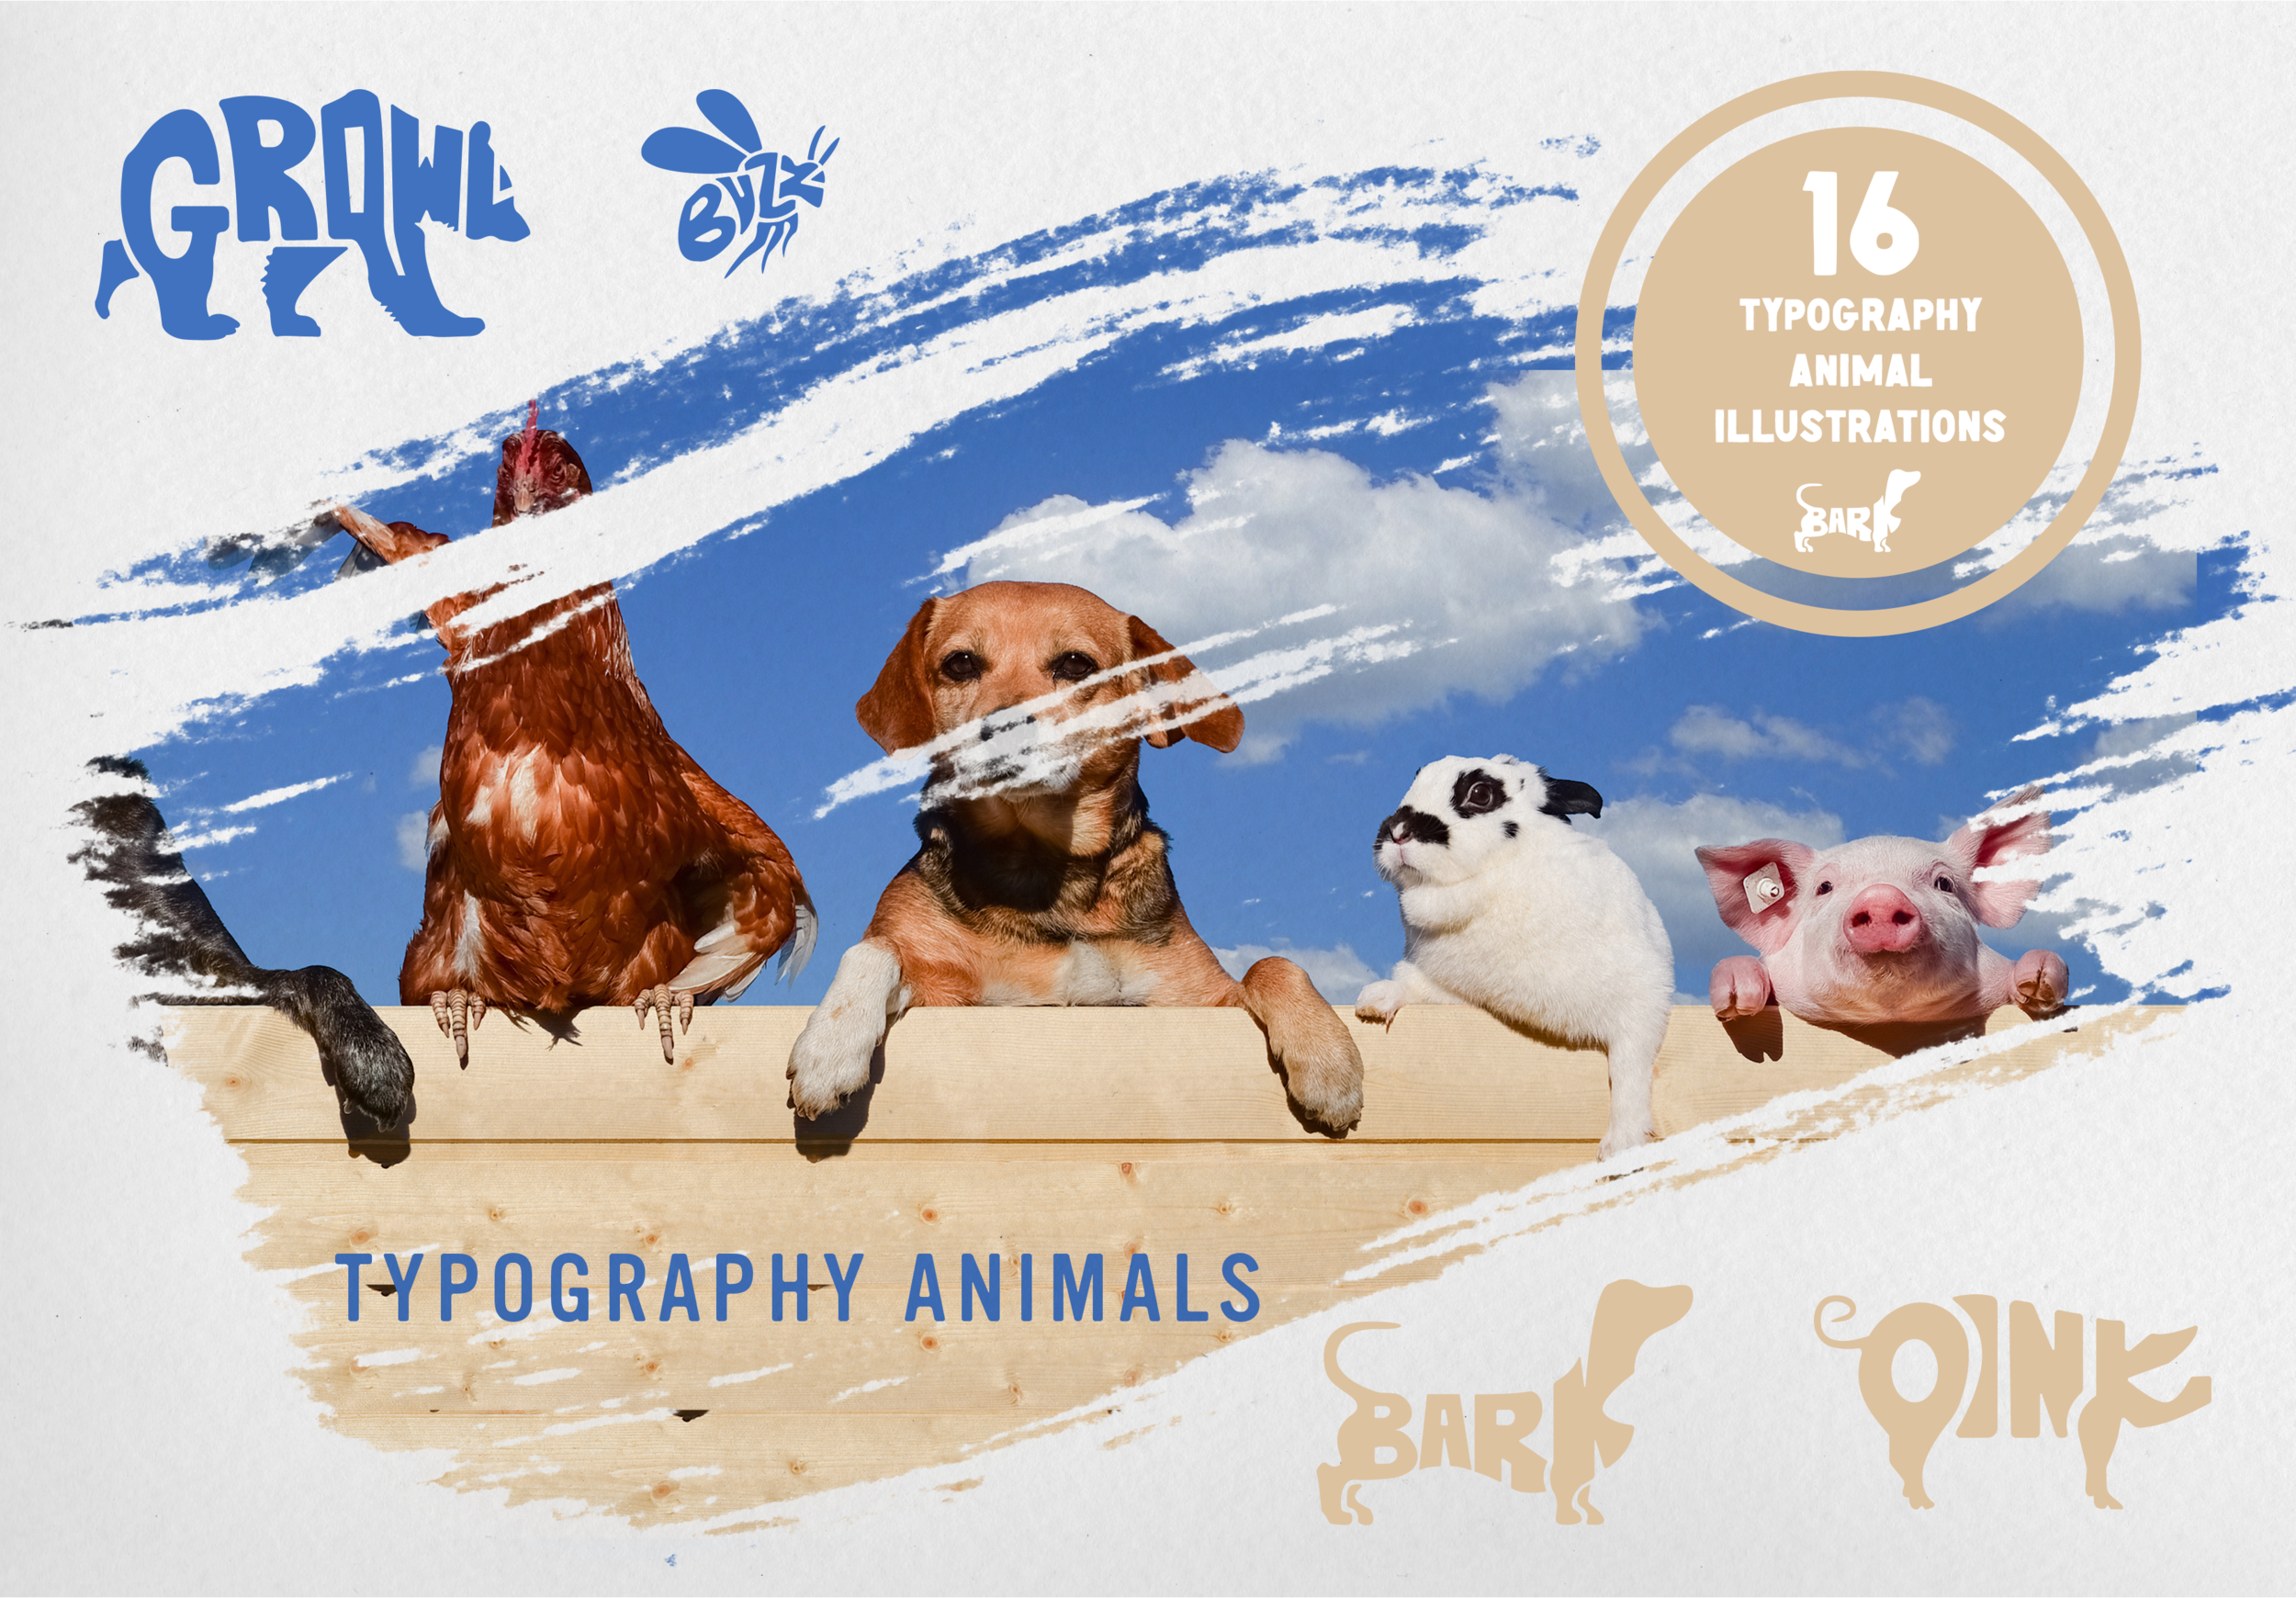 Typography Animals — Salty Sweet Creative